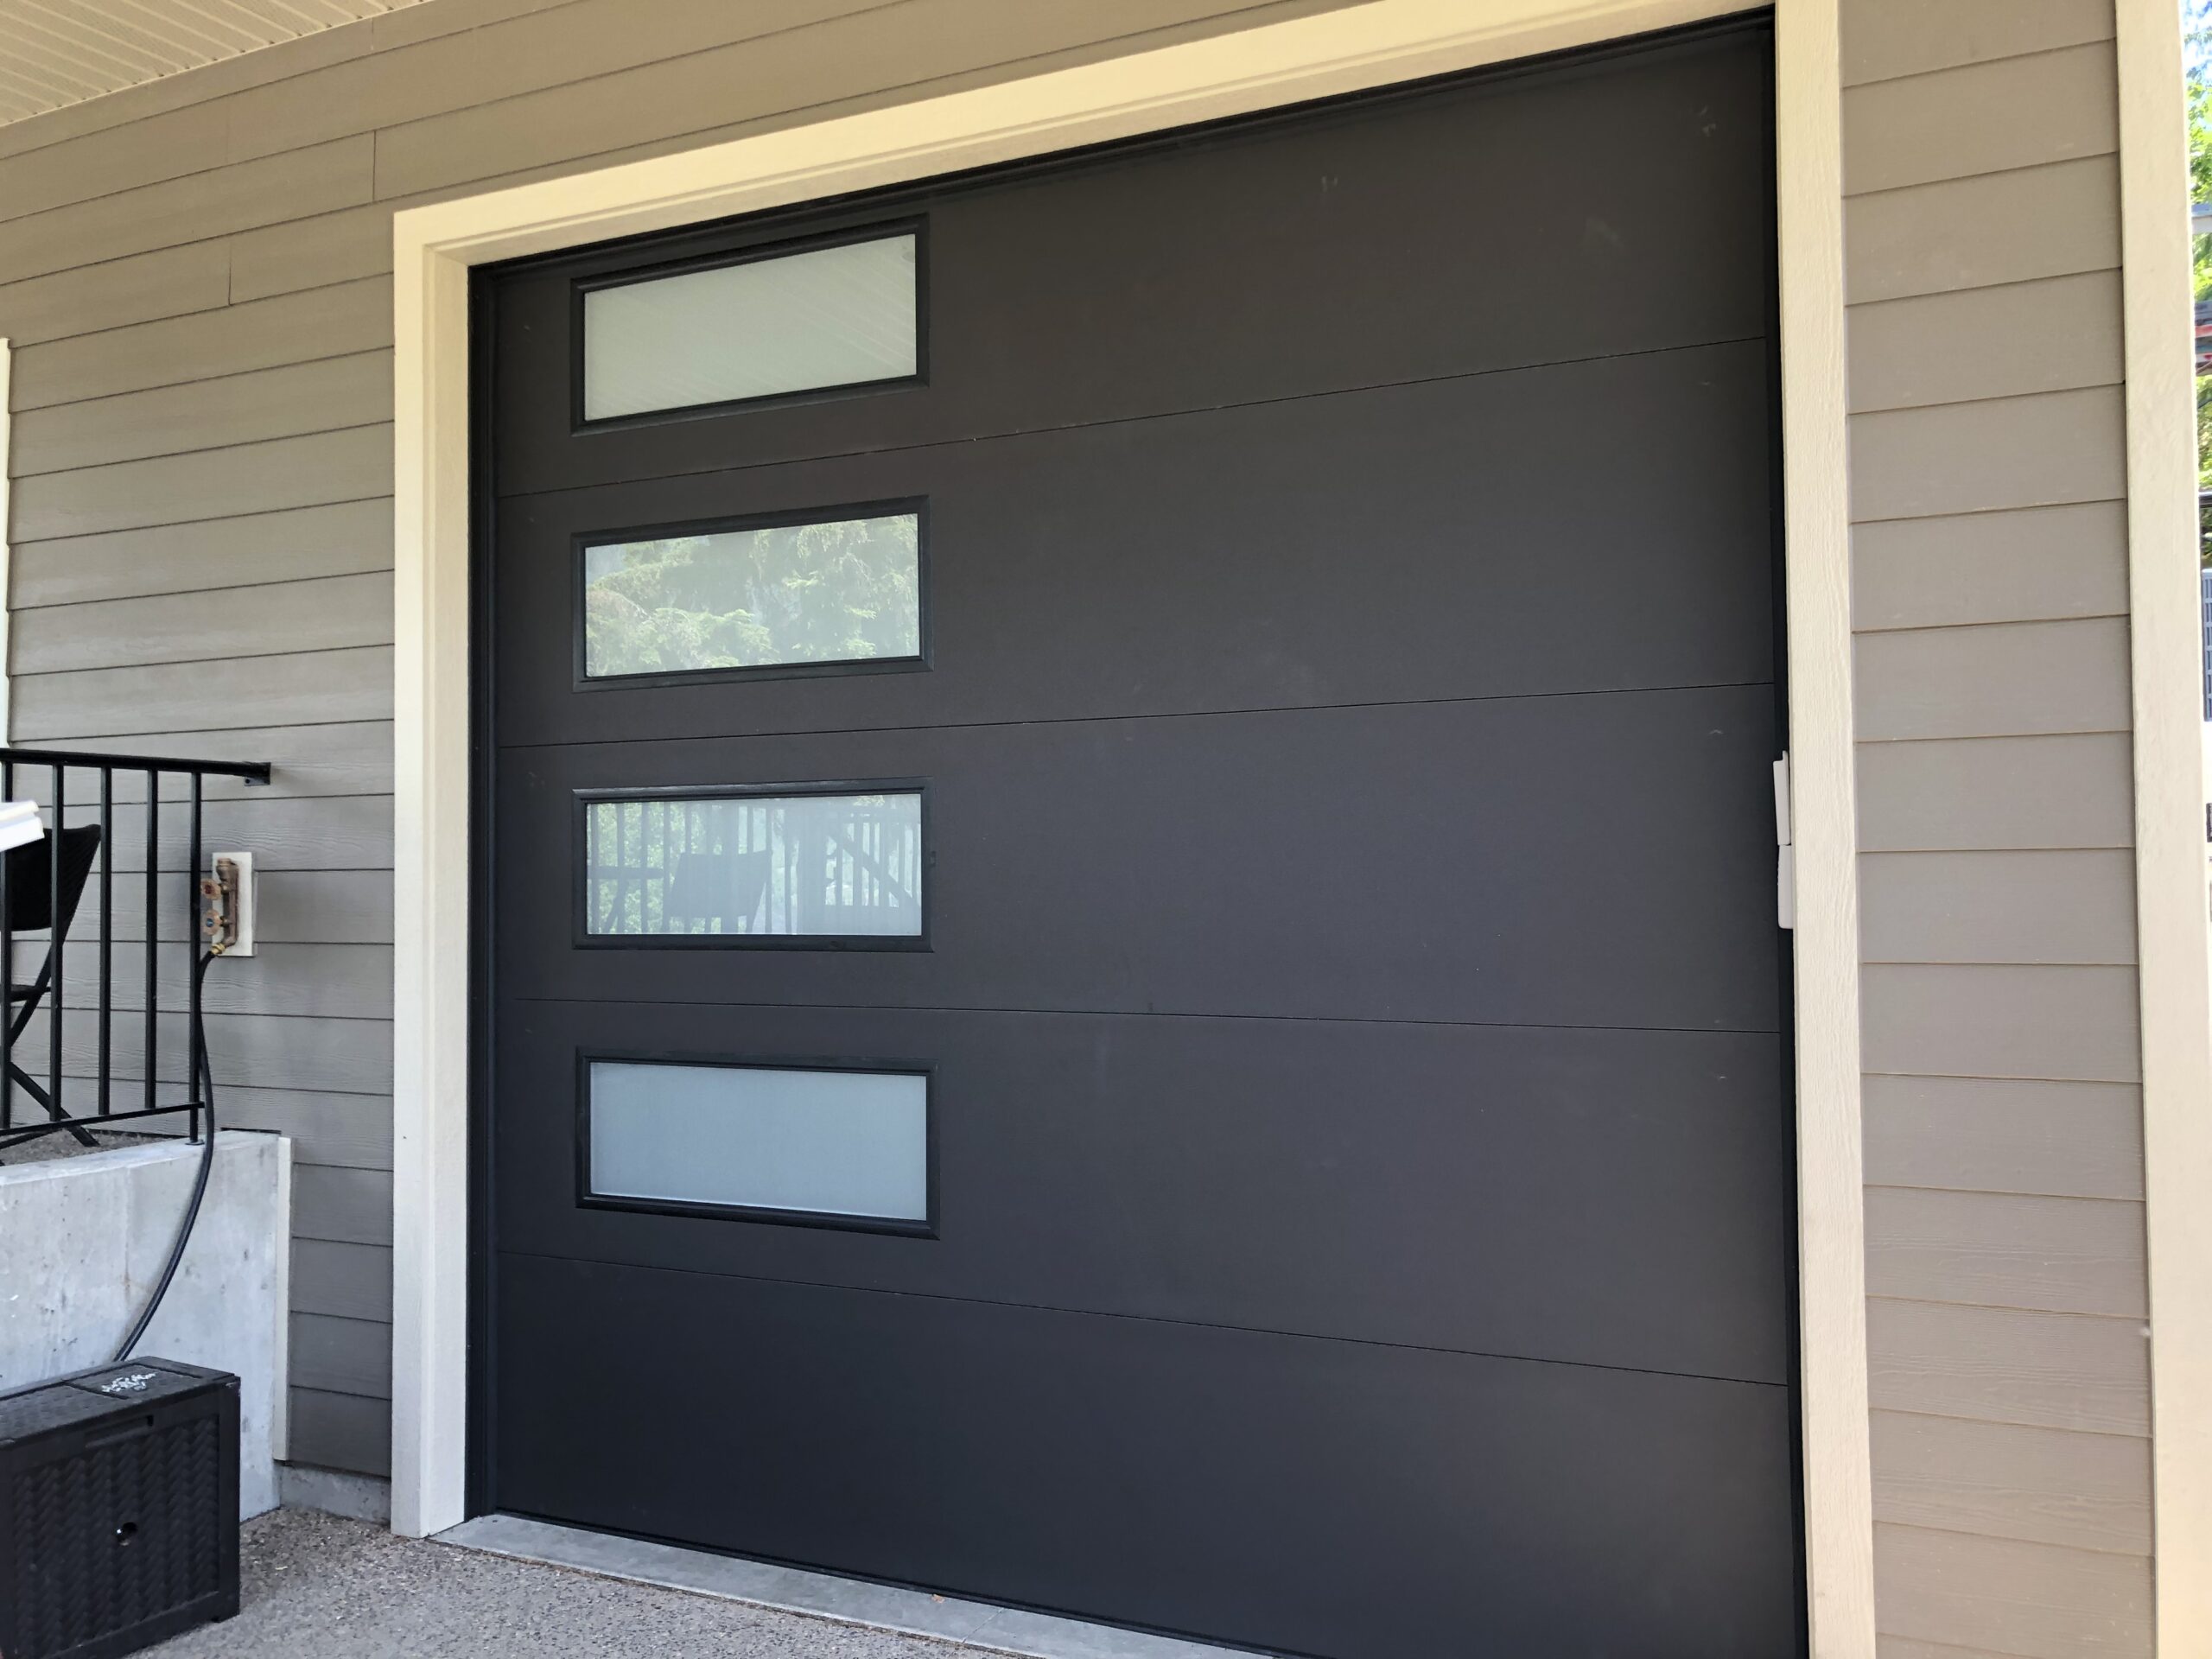 Modern flush garage door with windows on the side